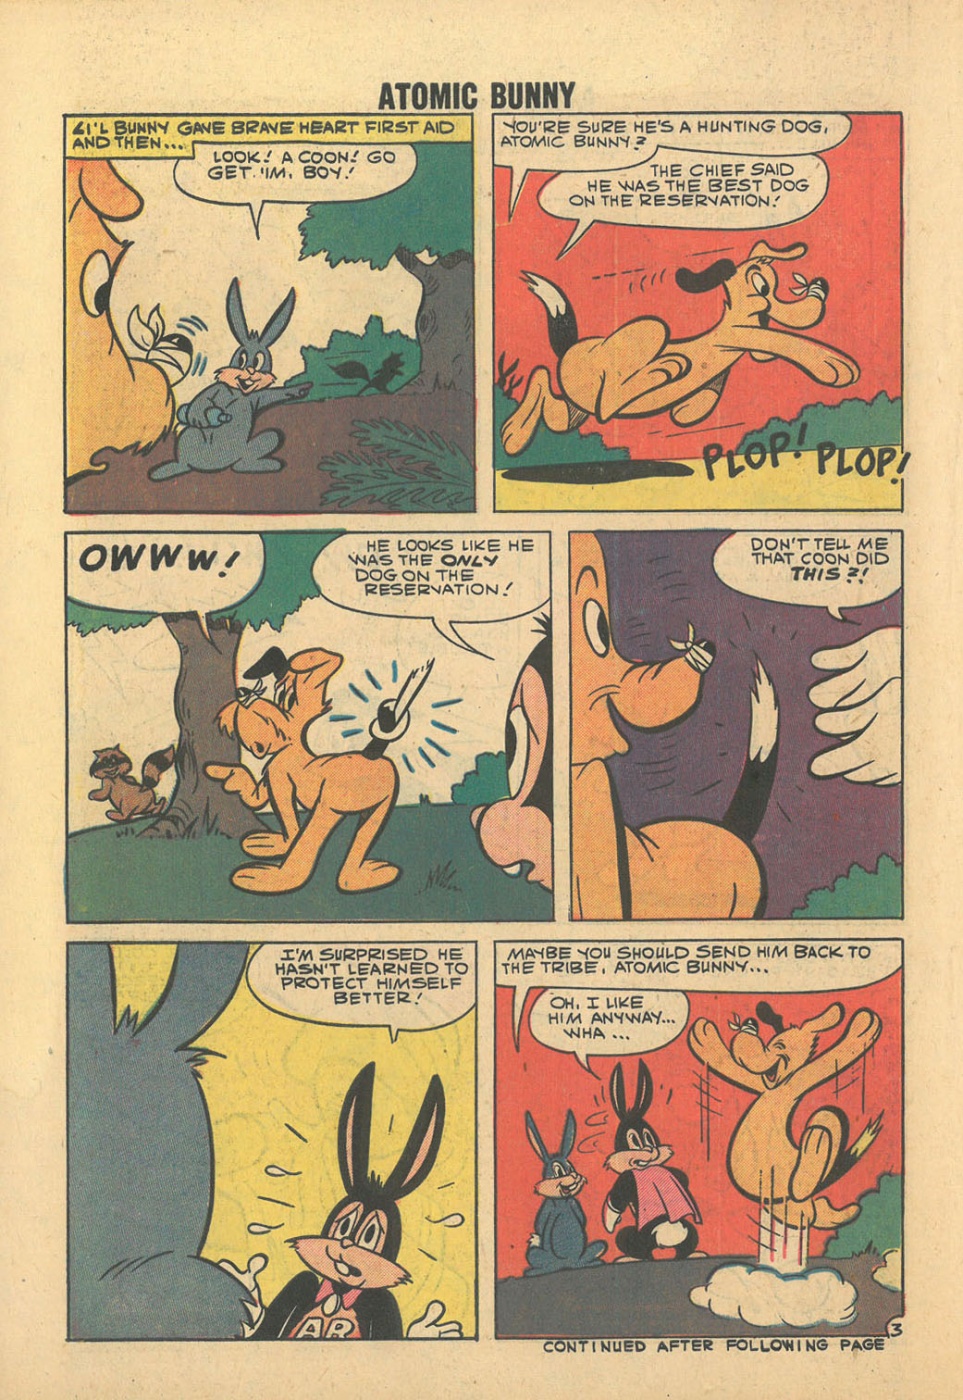 Atomic-Bunny-Comic-Strips (b) (29)